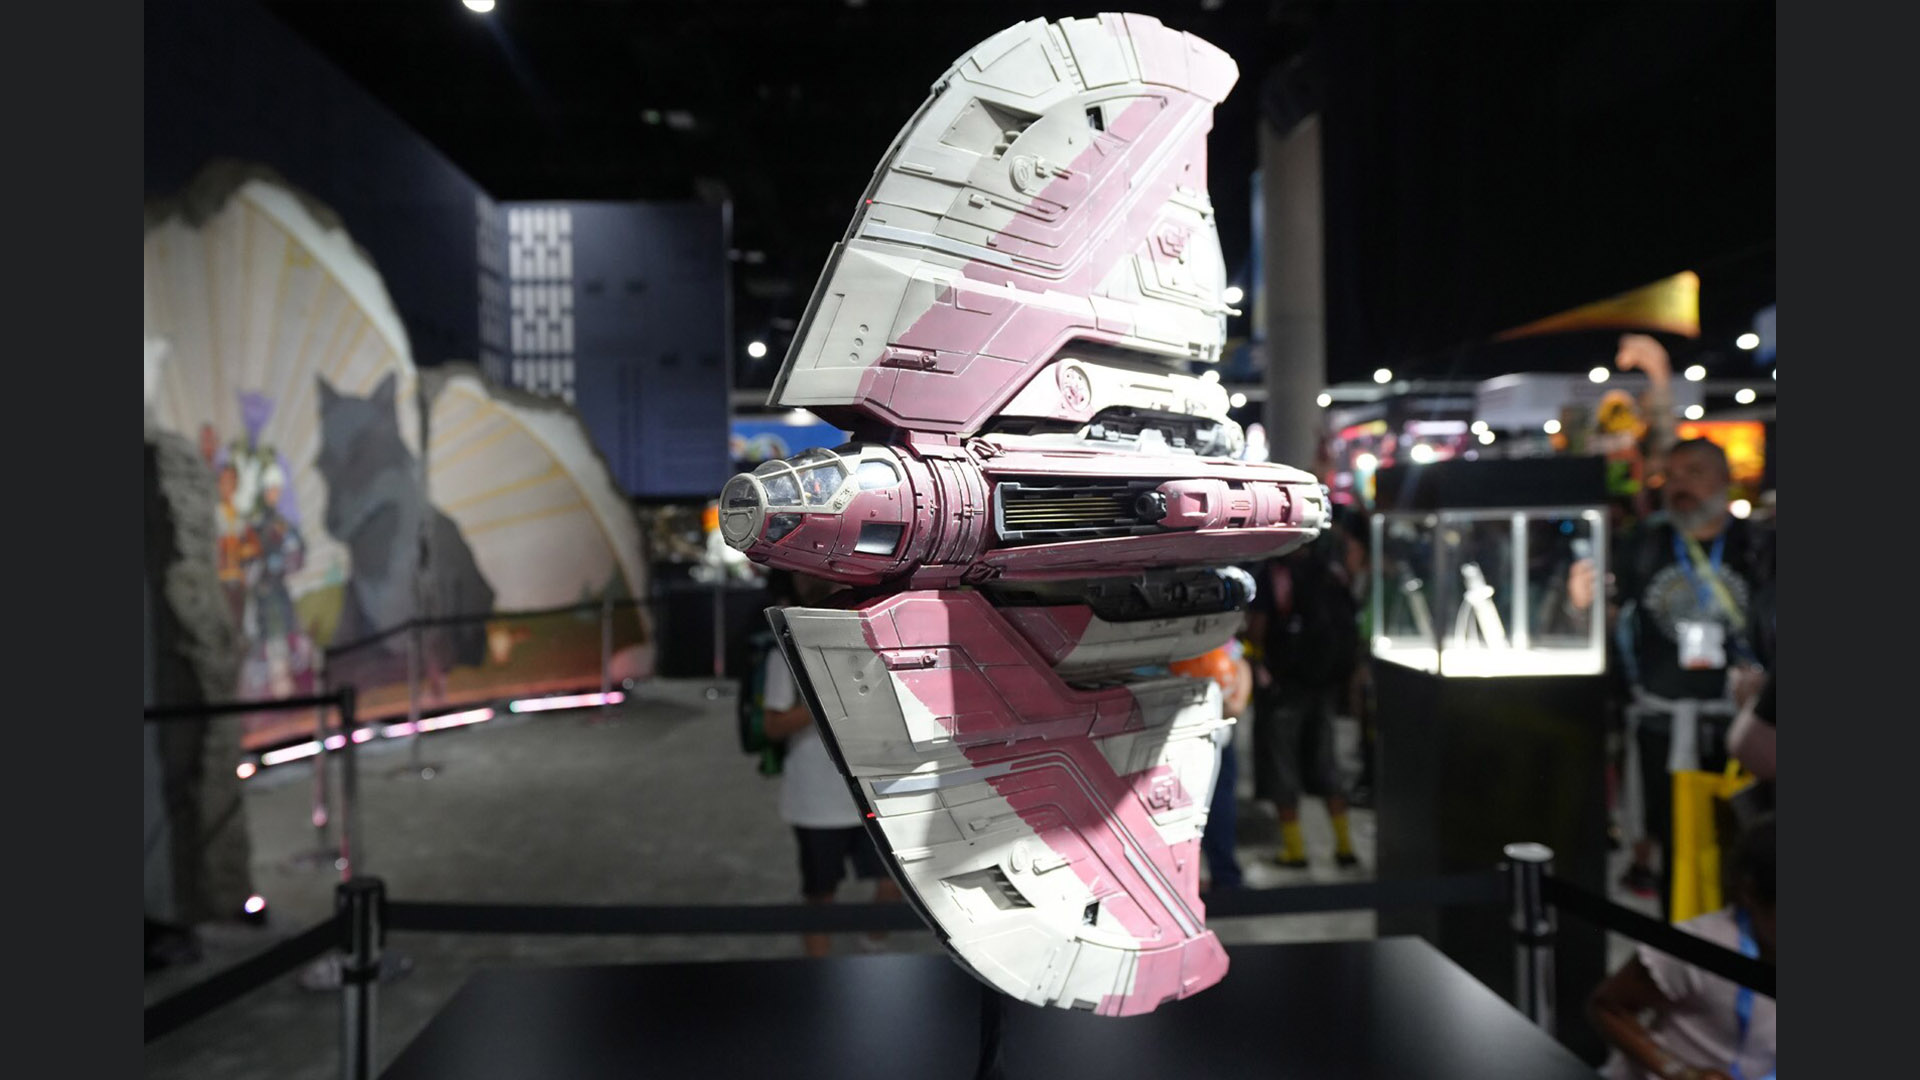 A new starship at Comic-Con